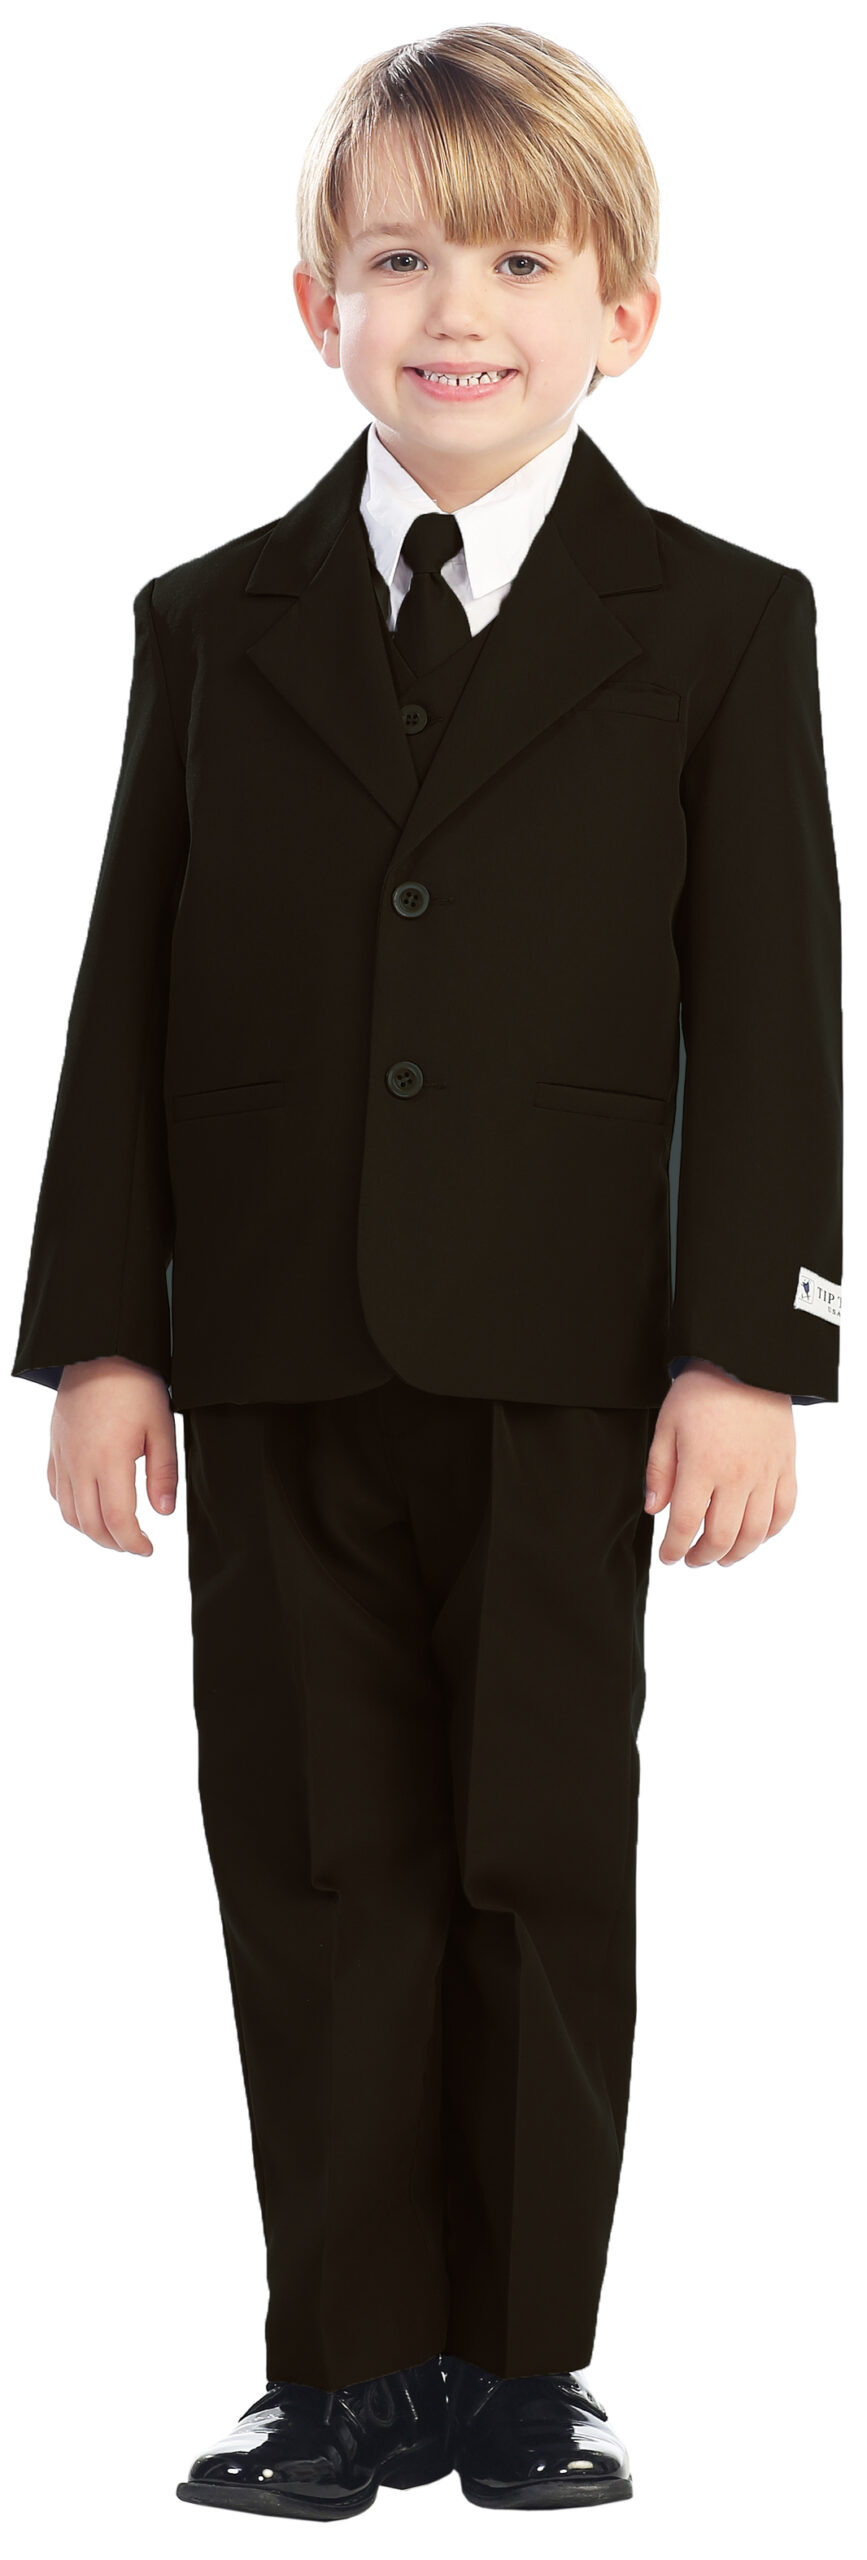 Avery Hill 5-Piece Boy's 2-Button Dress Suit Full-Back Vest - Brown S (3 - 6 Months)